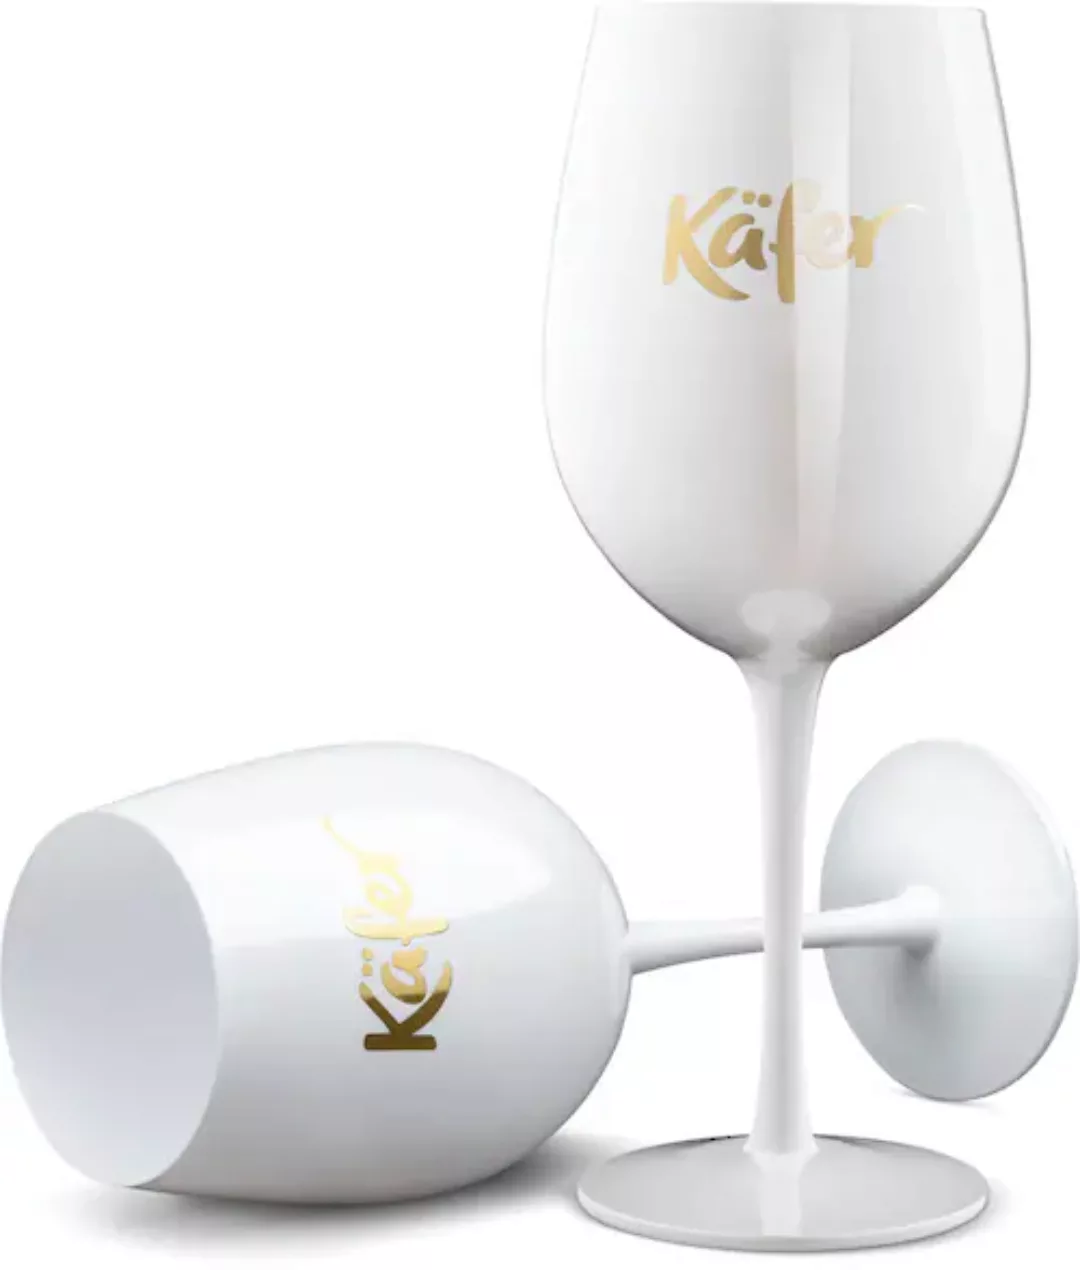 Käfer Cocktailglas, (Set, 2 tlg., 2 Gläser), 600 ml günstig online kaufen